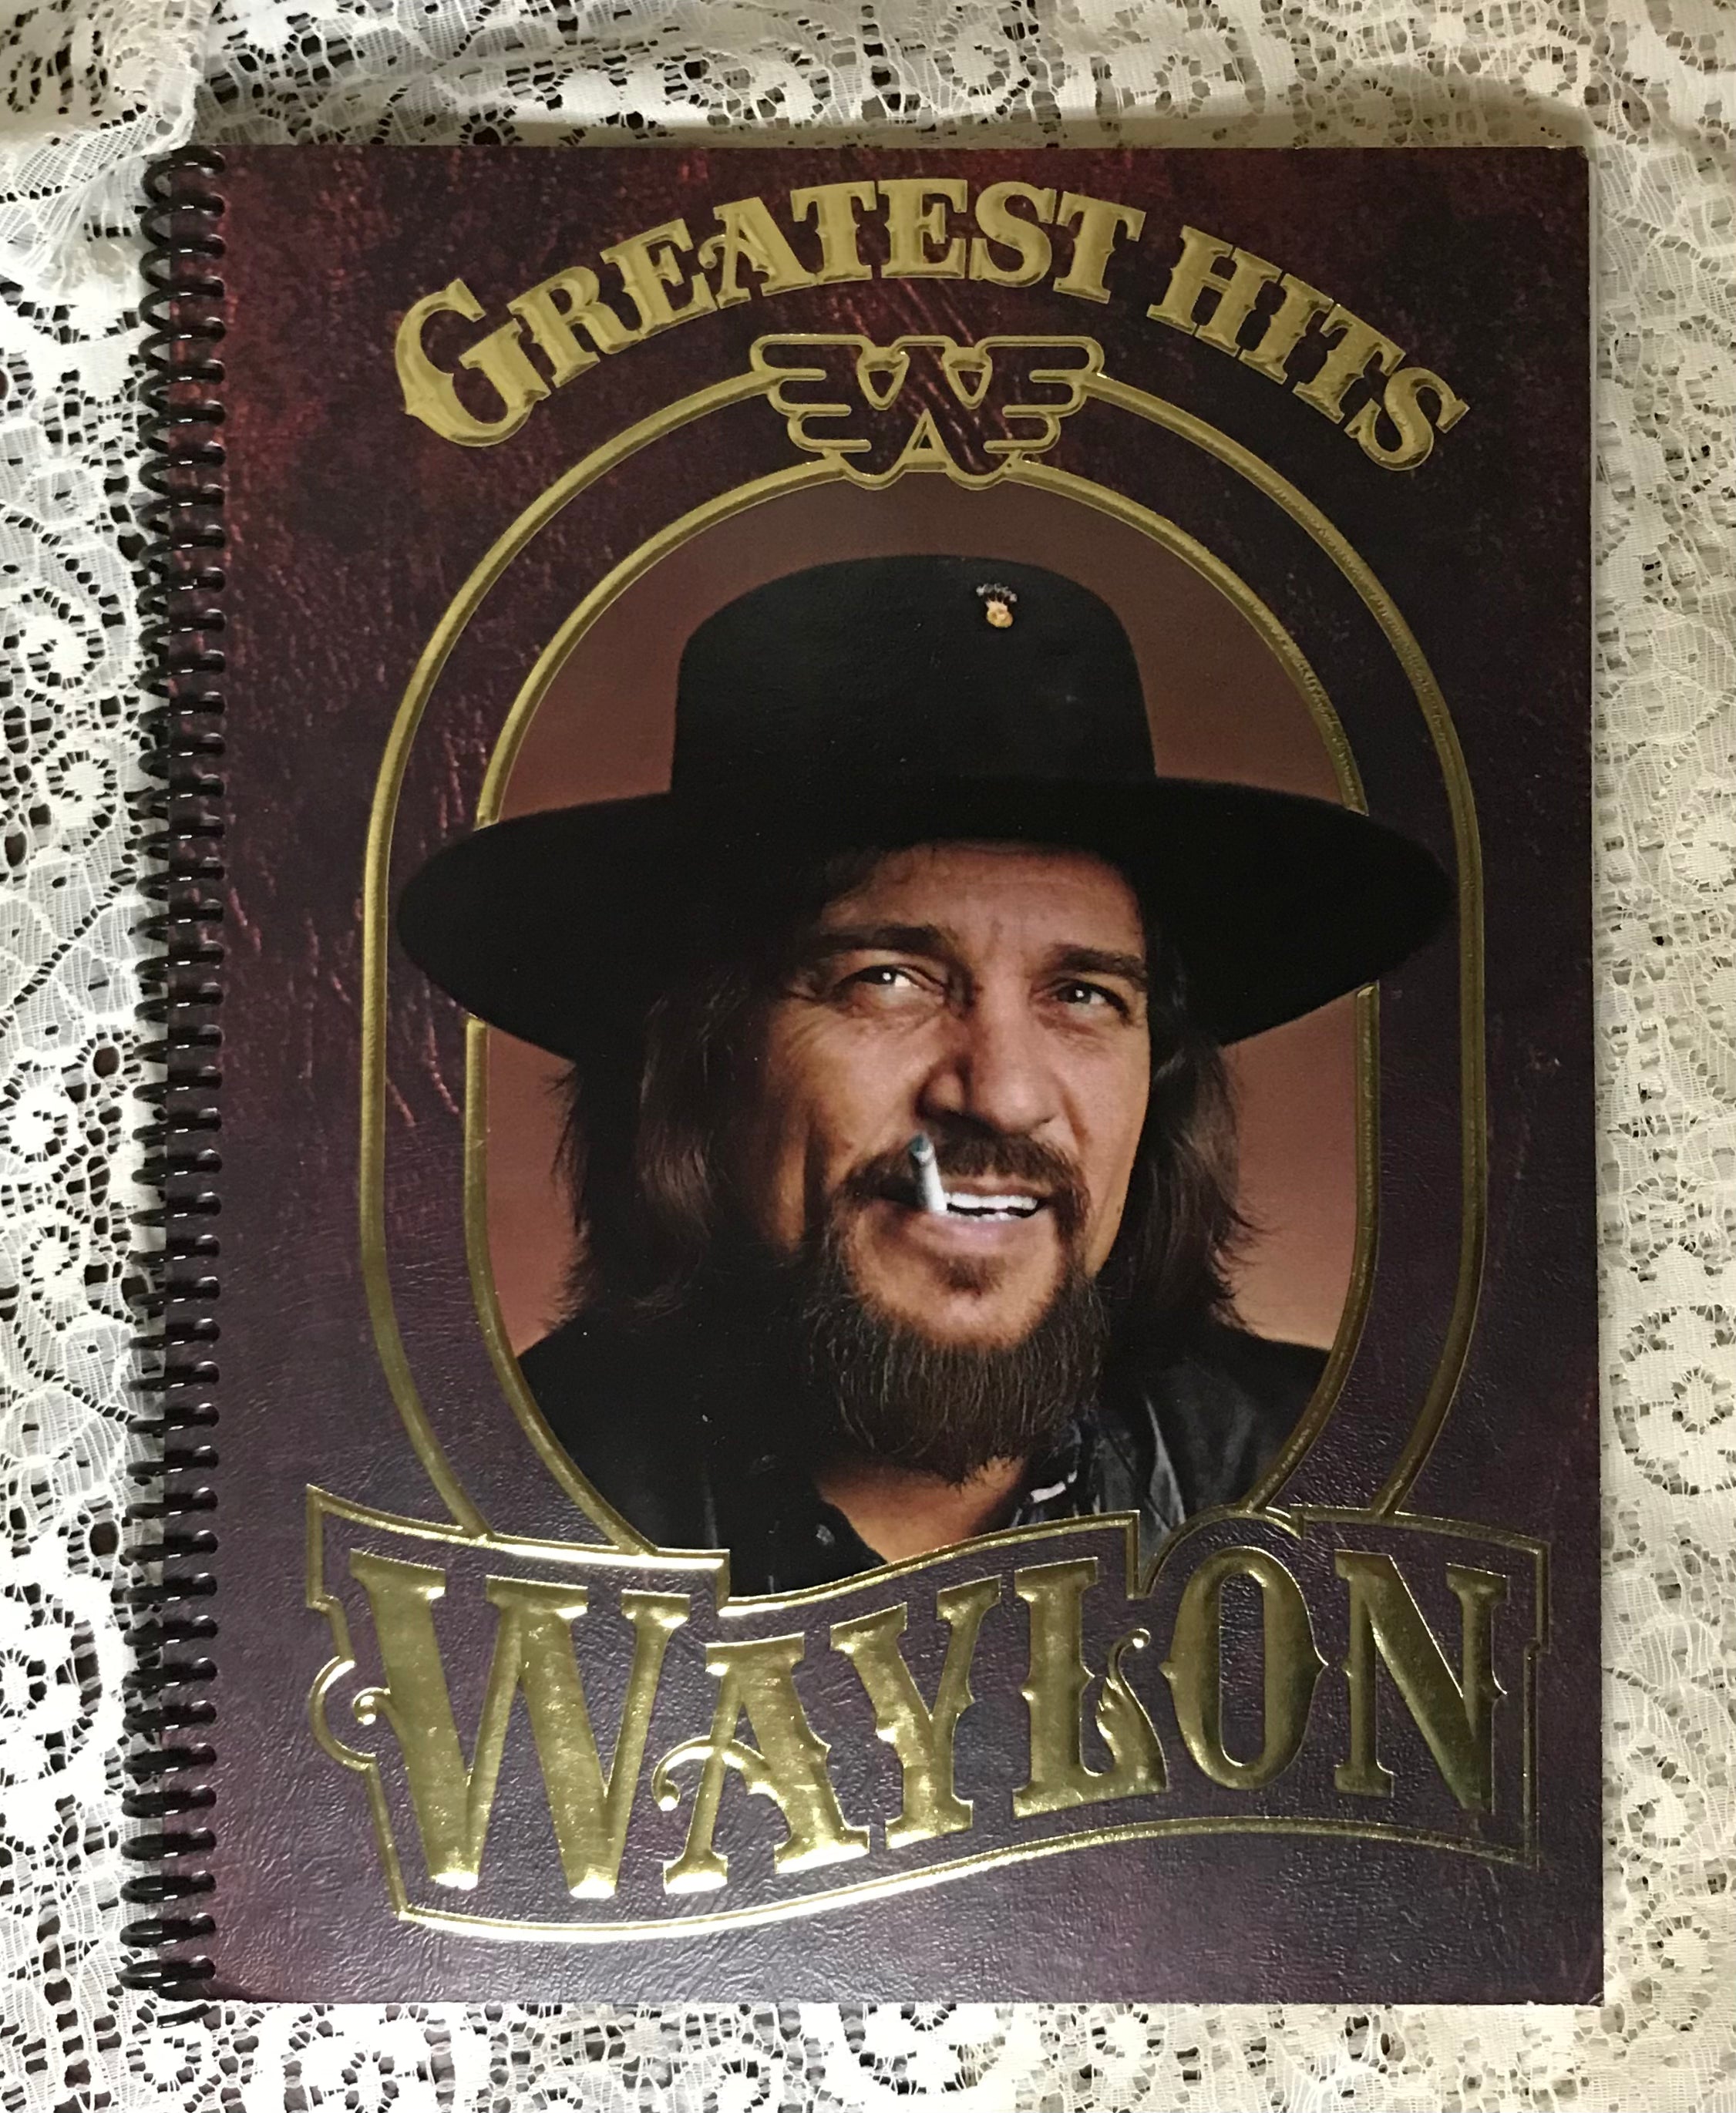 Waylon Jennings Greatest Hits Album Cover Notebook